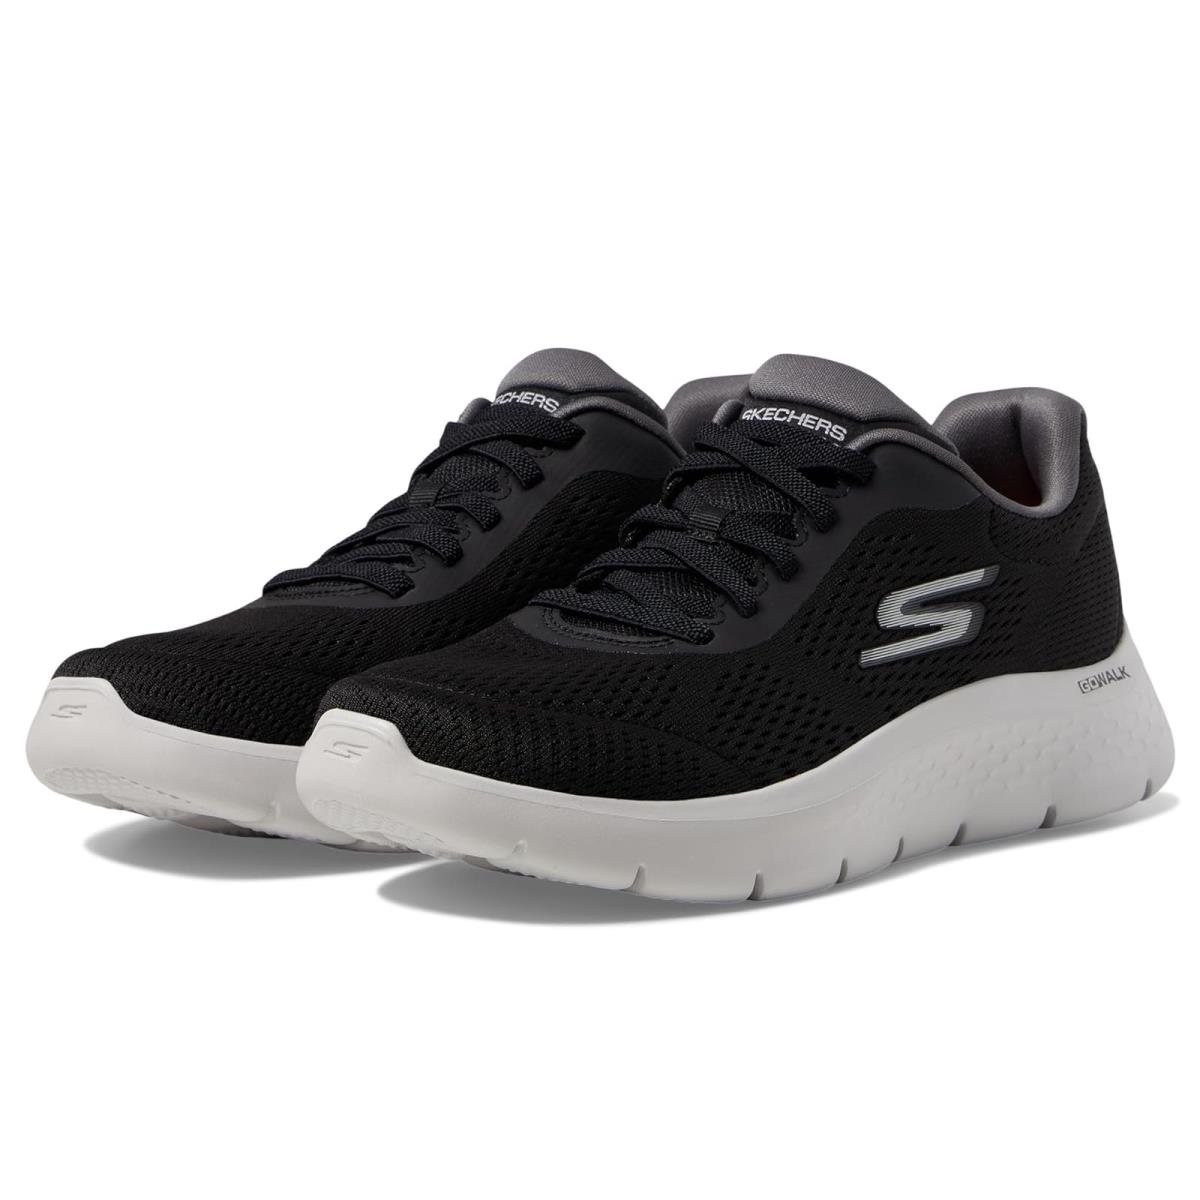 Man`s Sneakers Athletic Shoes Skechers Performance Go Walk Flex - Remark Black/Grey